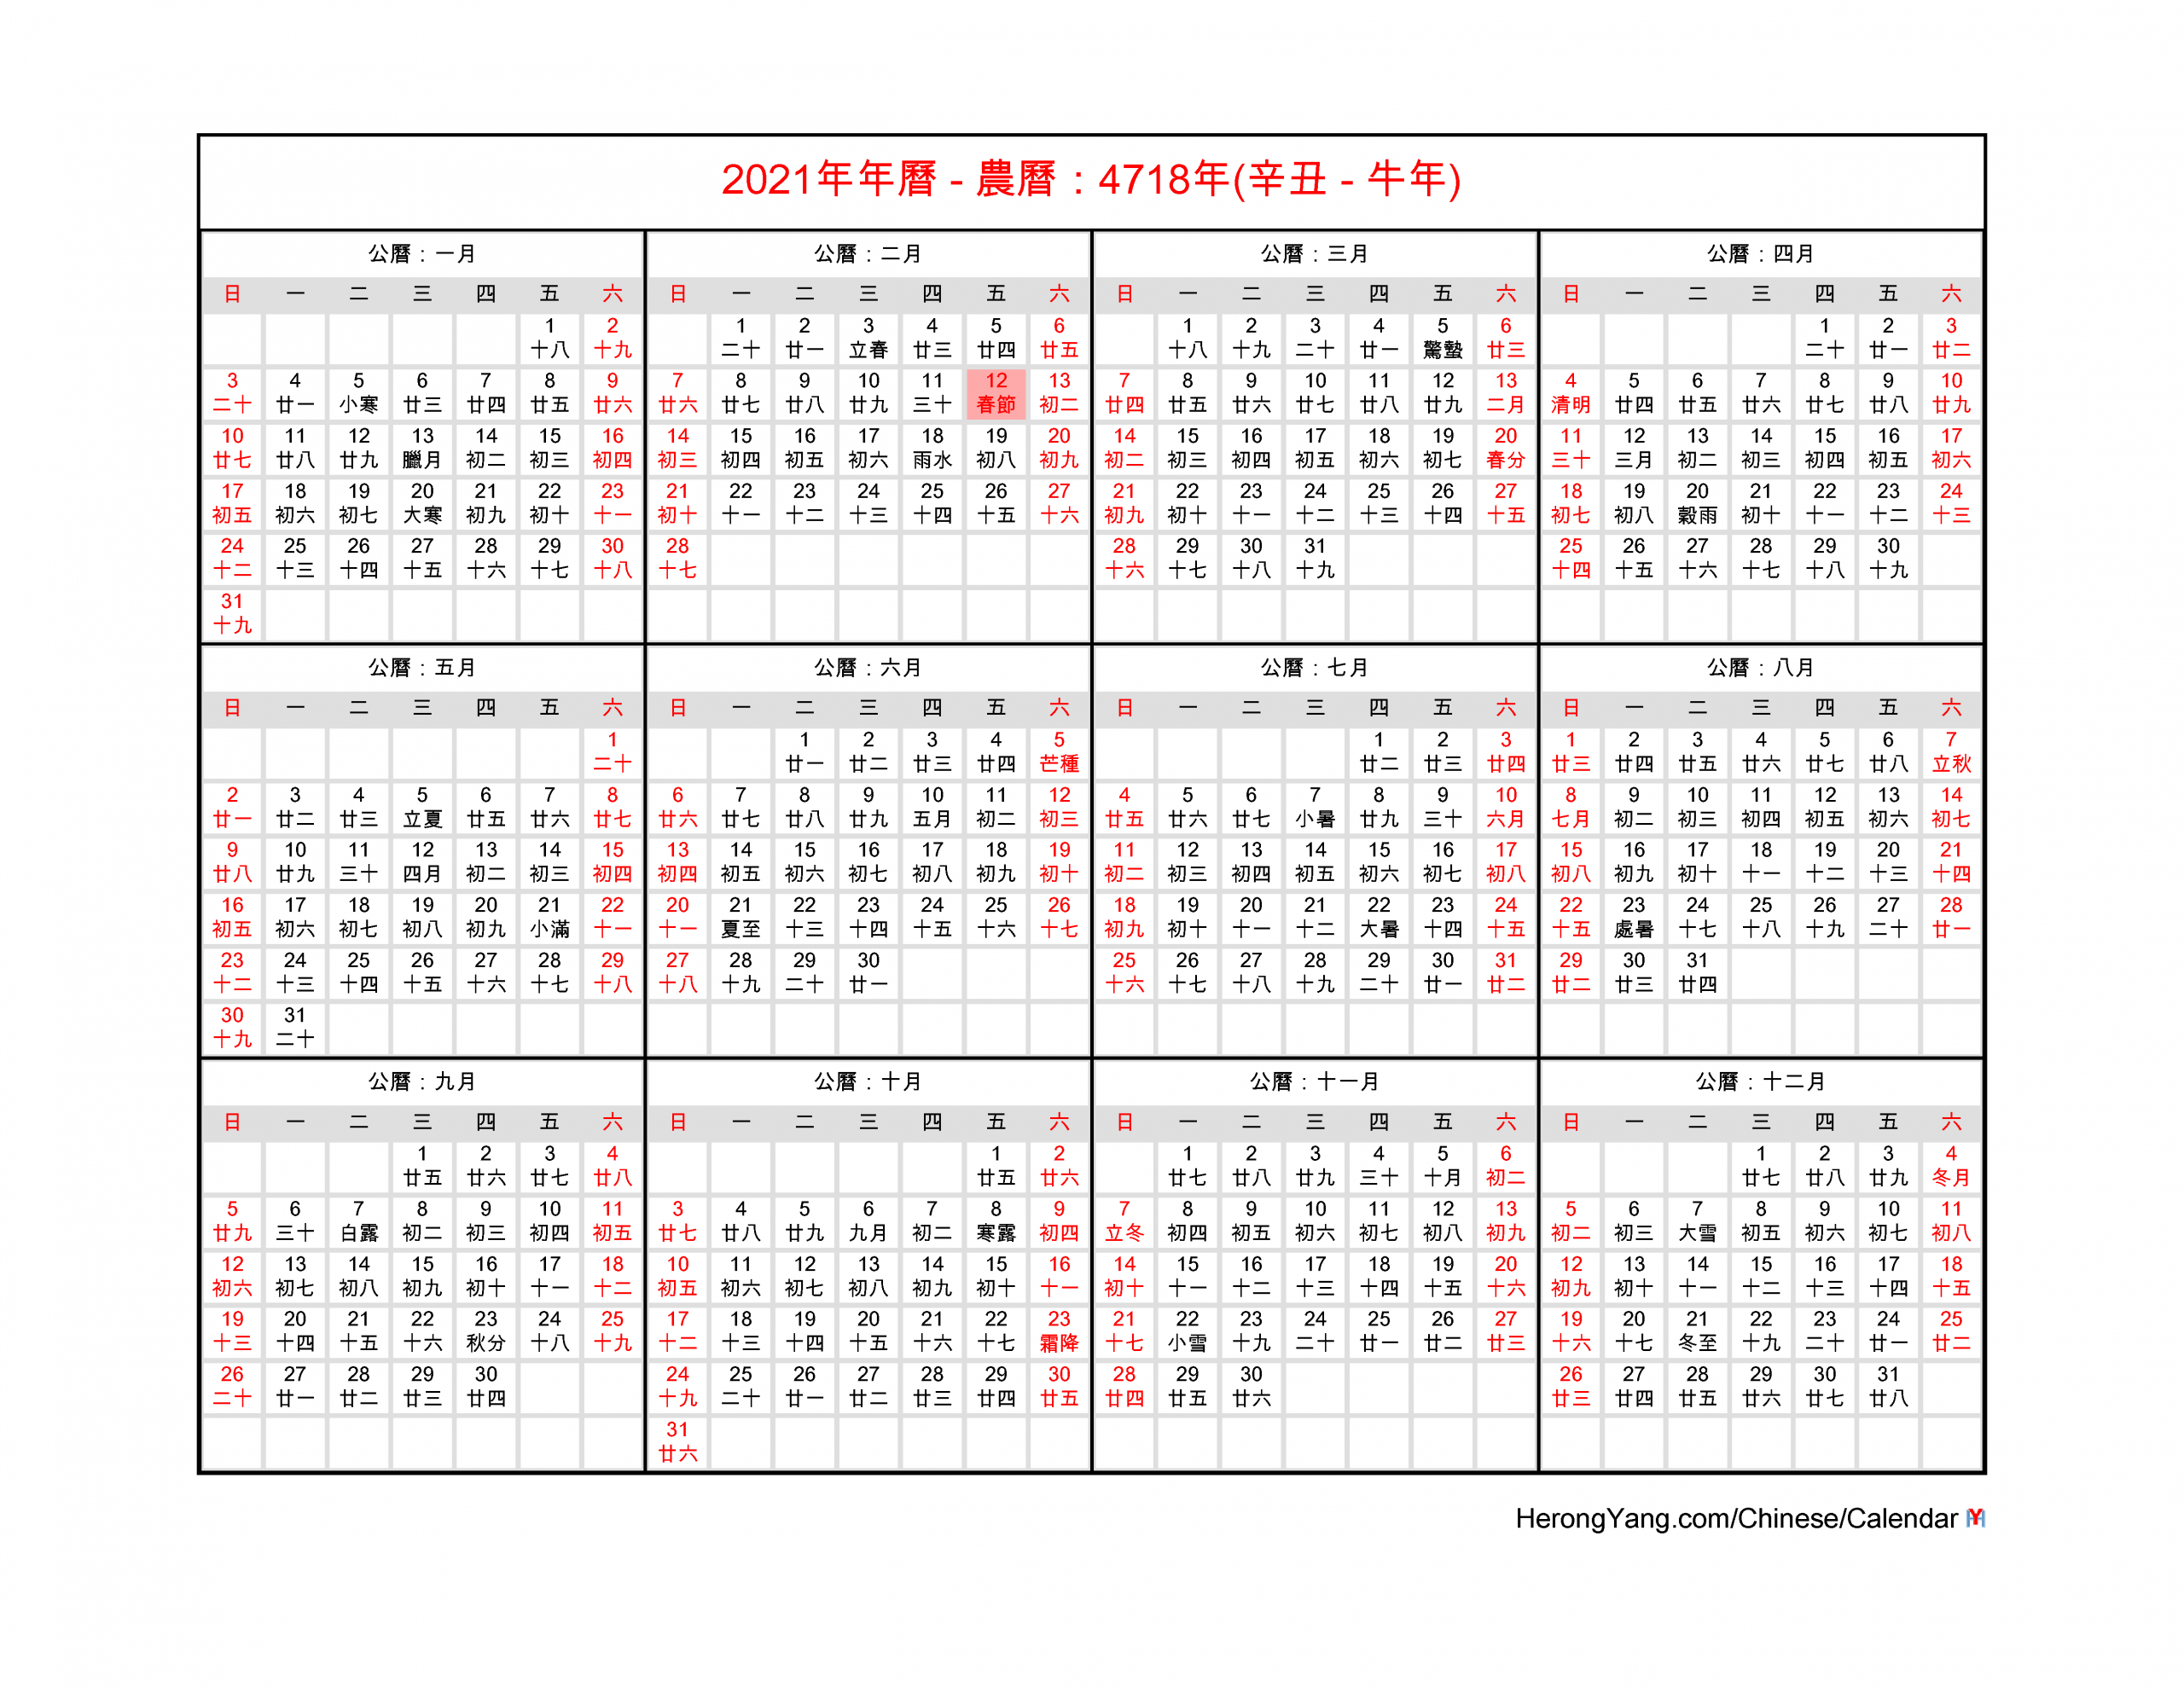 Chinese Lunar Calendar 2021 / China Calendar 2020 - 2021